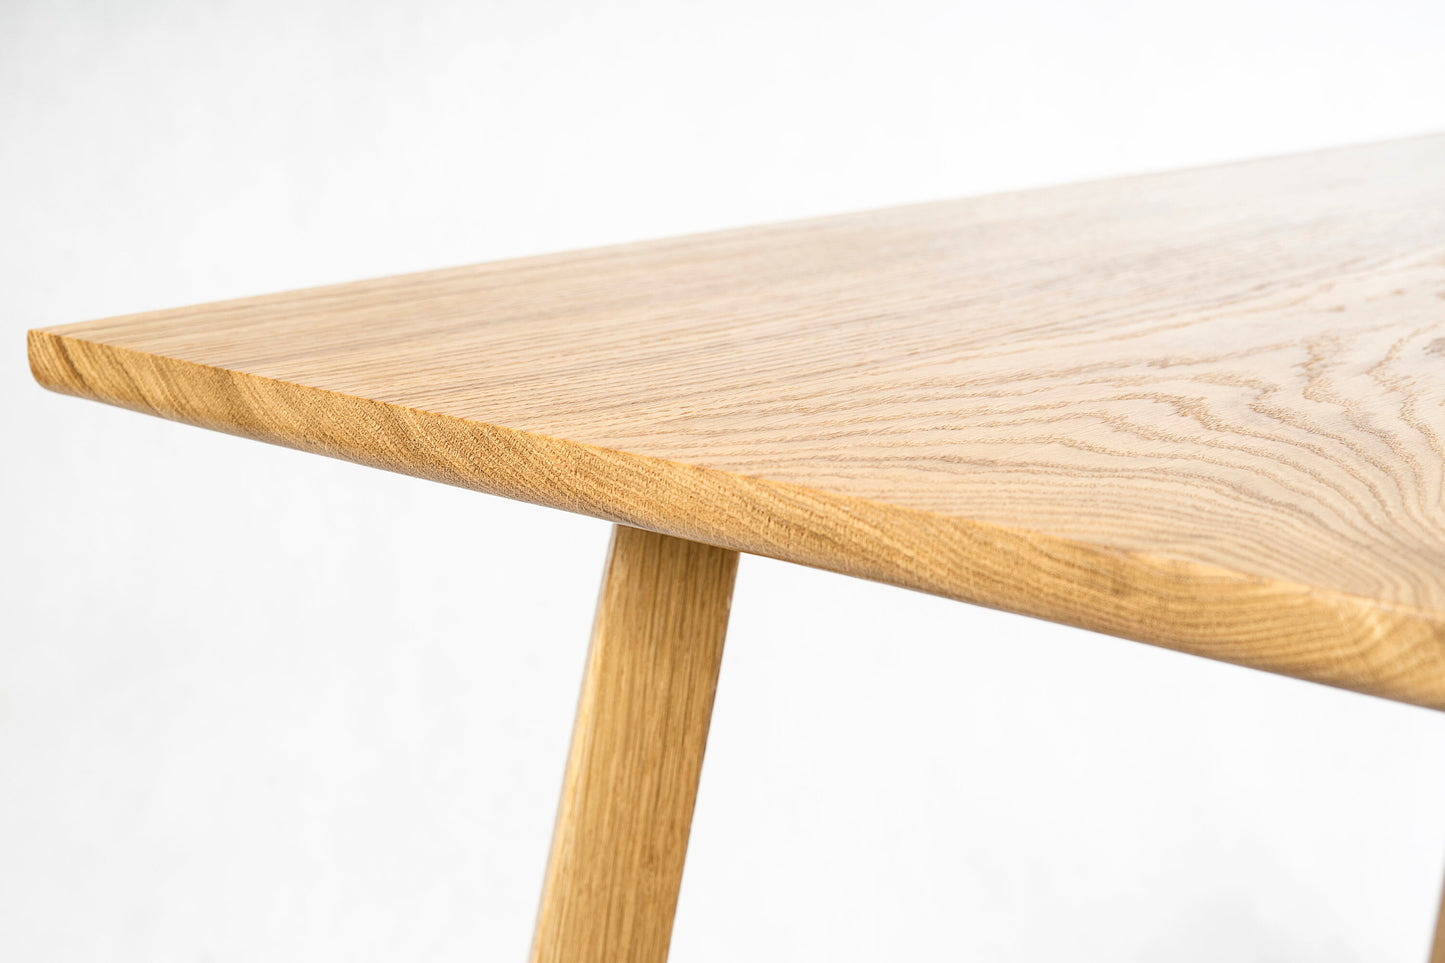 Live-edge, natural oak desk / table by M-ski